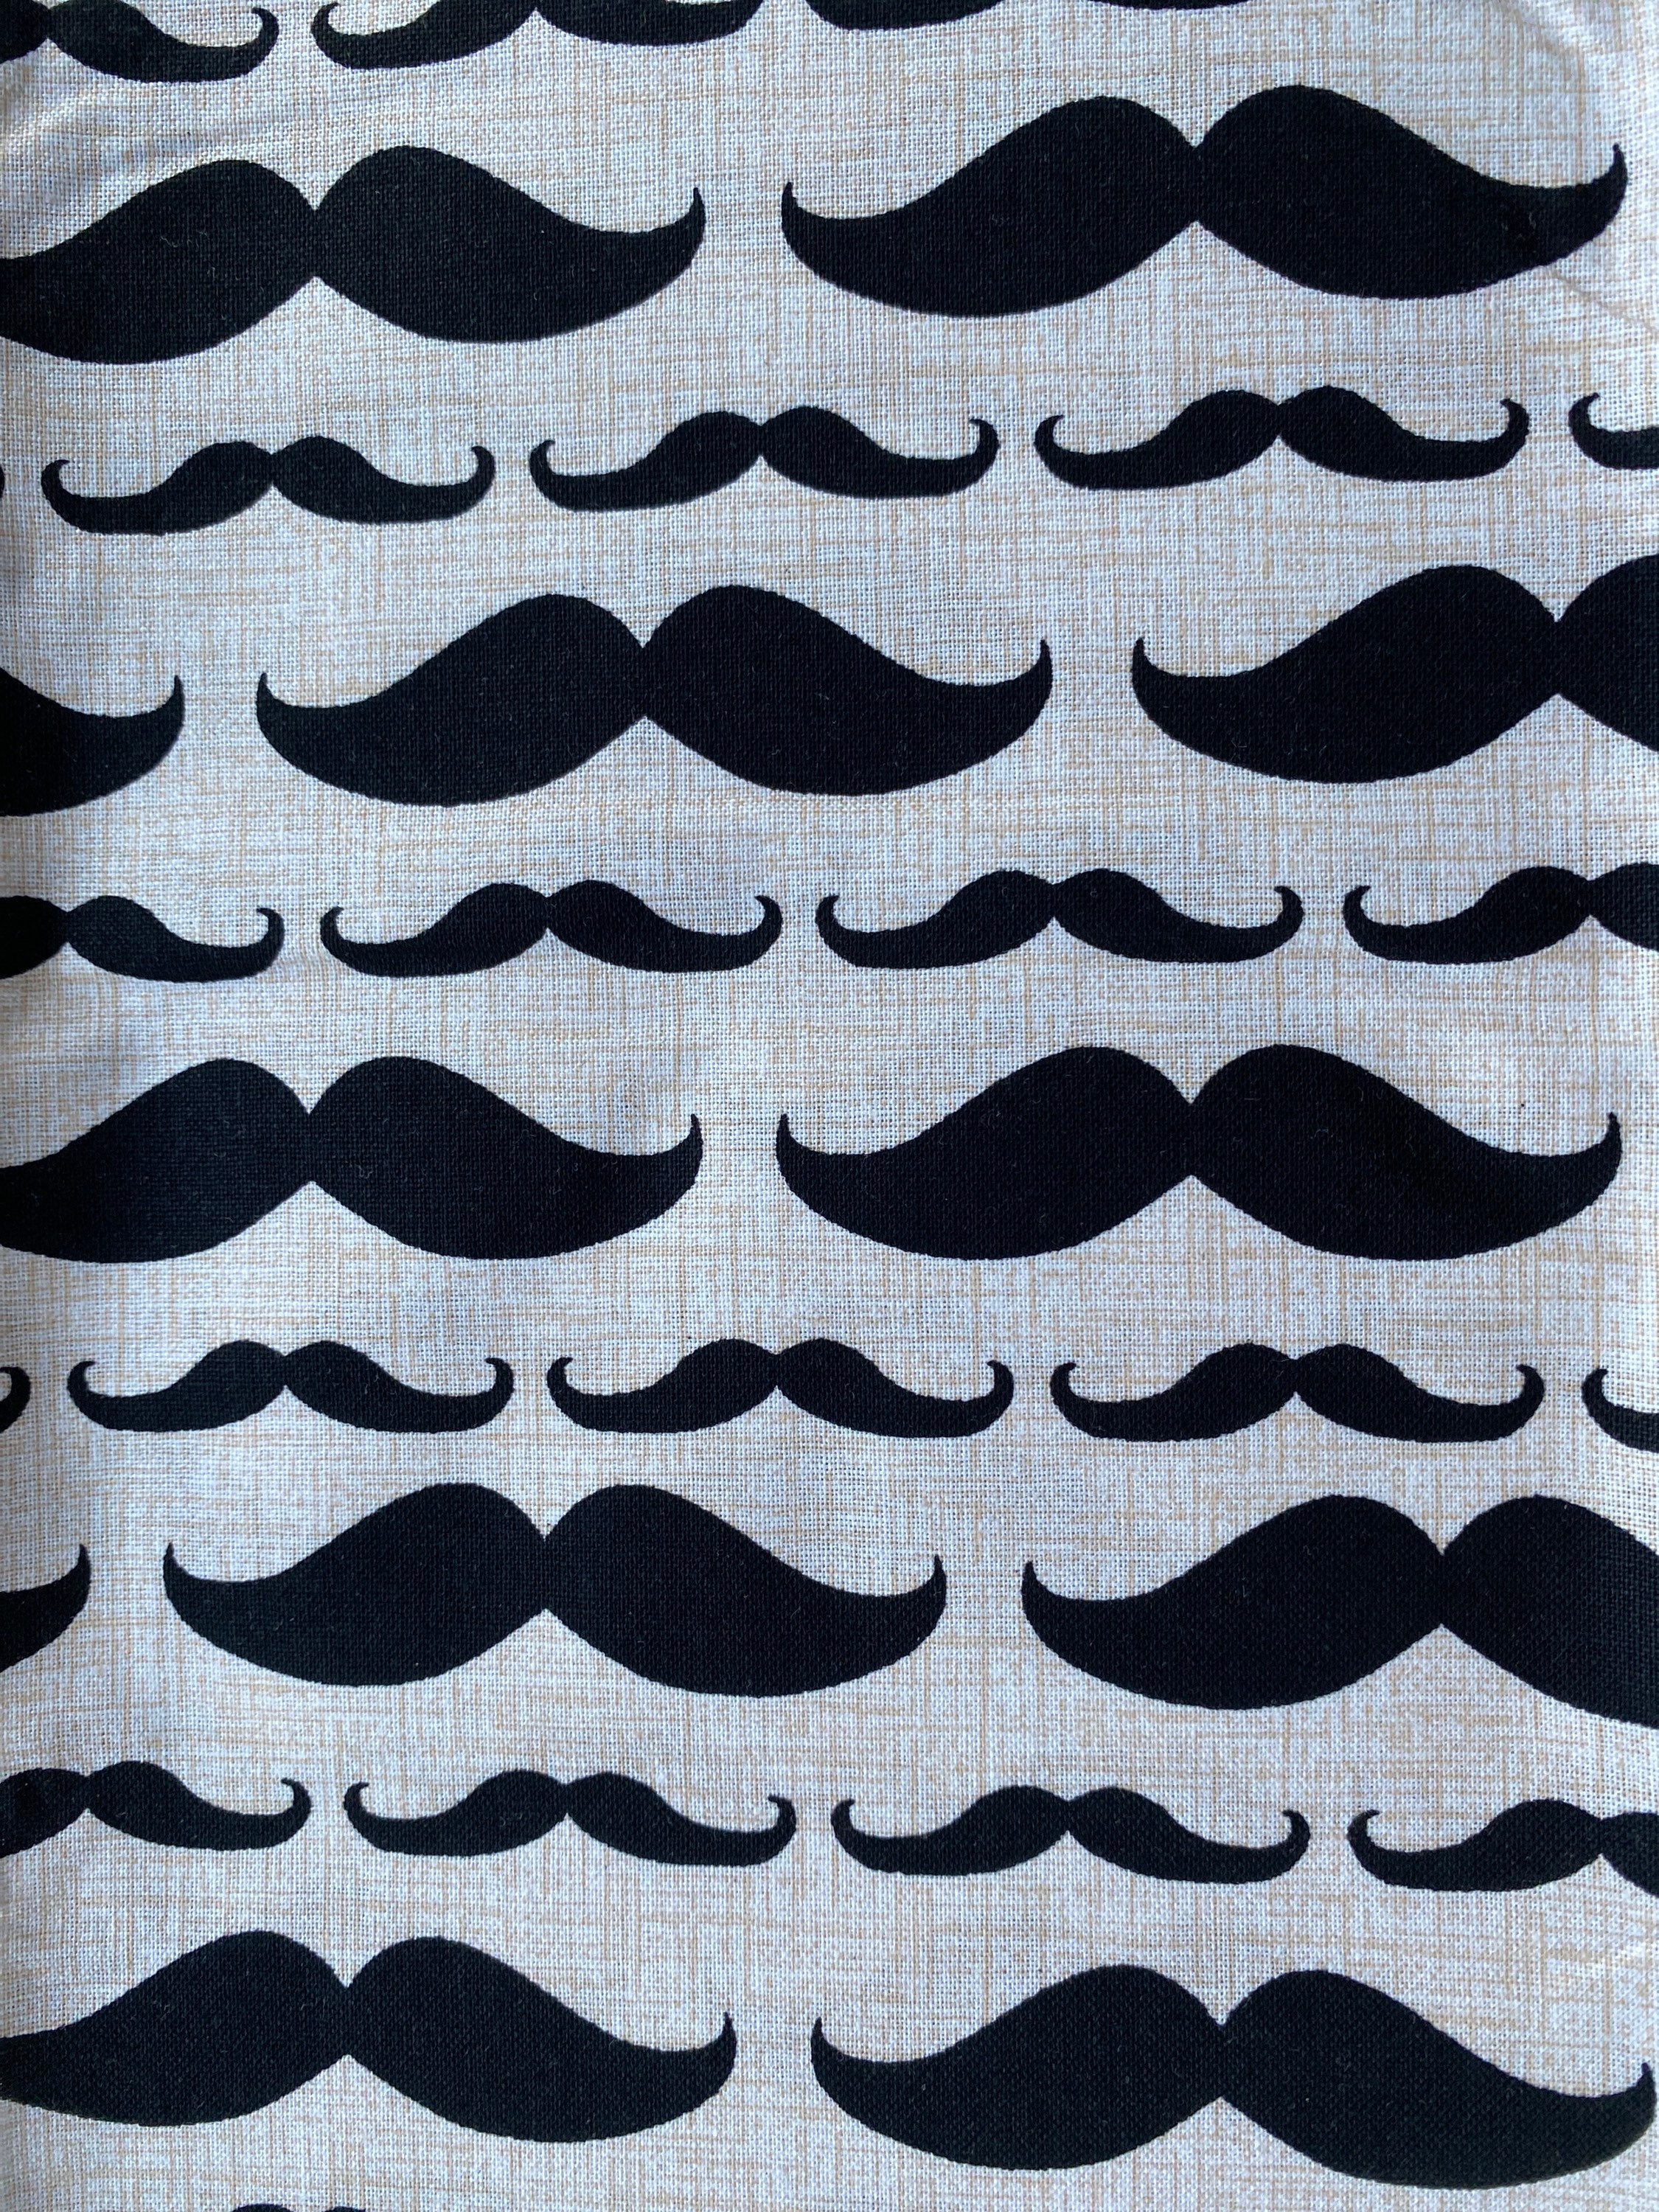 Mustache cotton fabric 18 x 21 fat quarter | Etsy